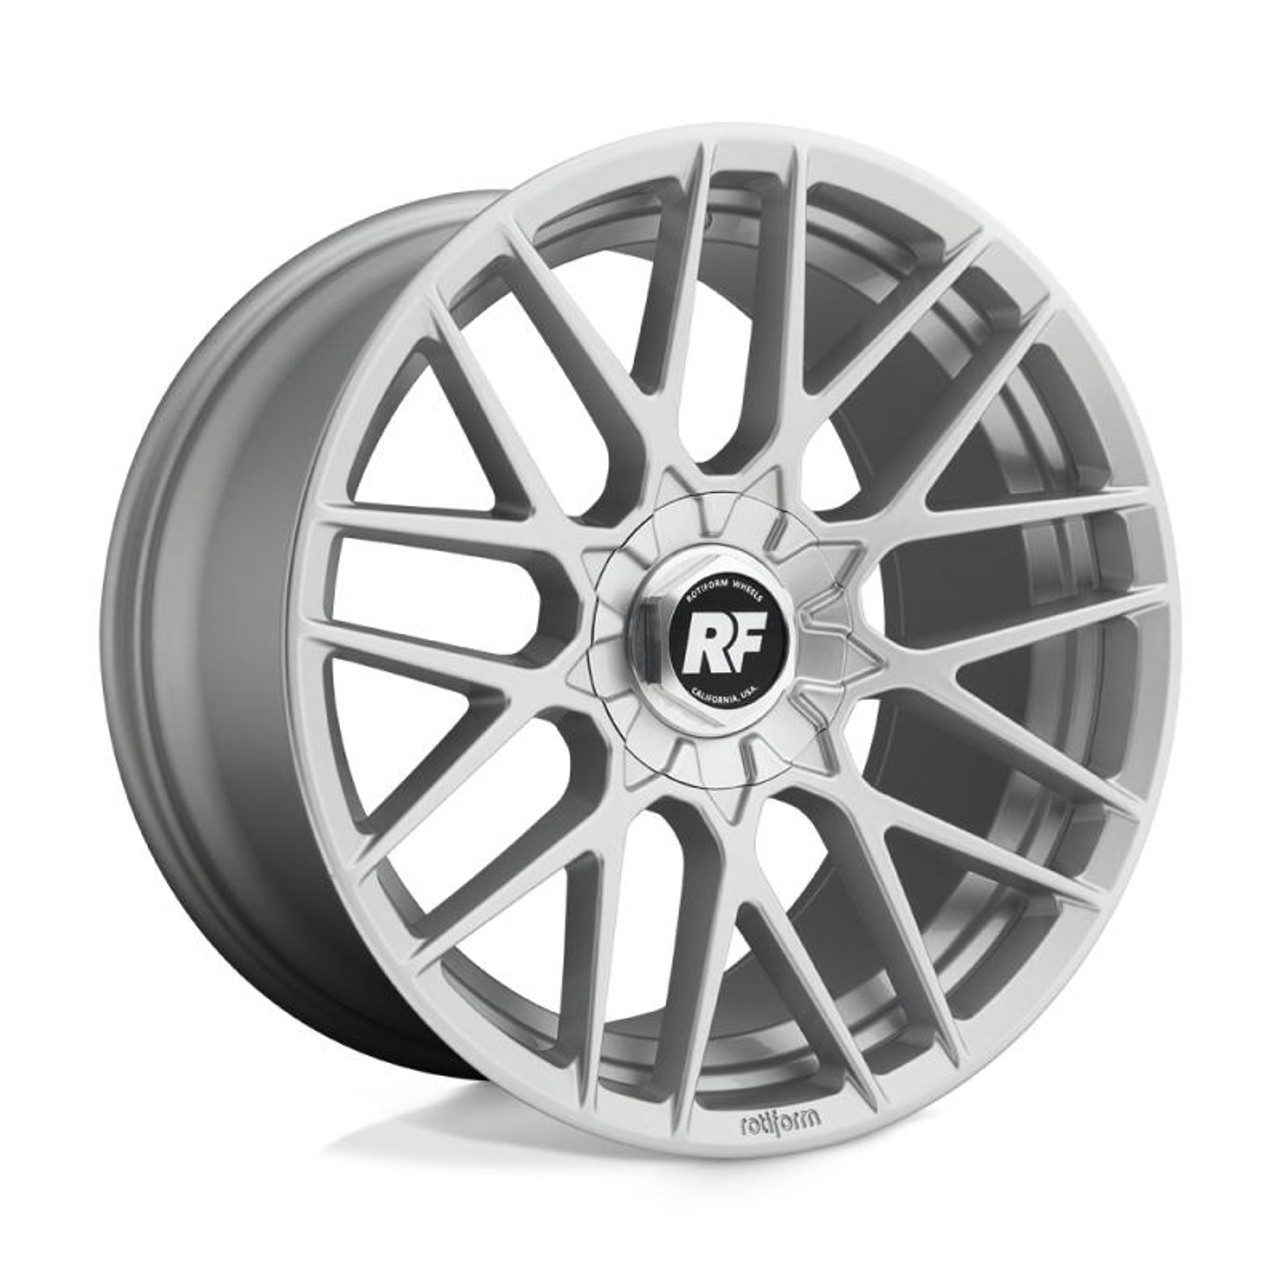  Rotiform R140 RSE Wheel 18x9.5 5x112/5x120 35 Offset - Gloss Silver - R1401895F4+35 